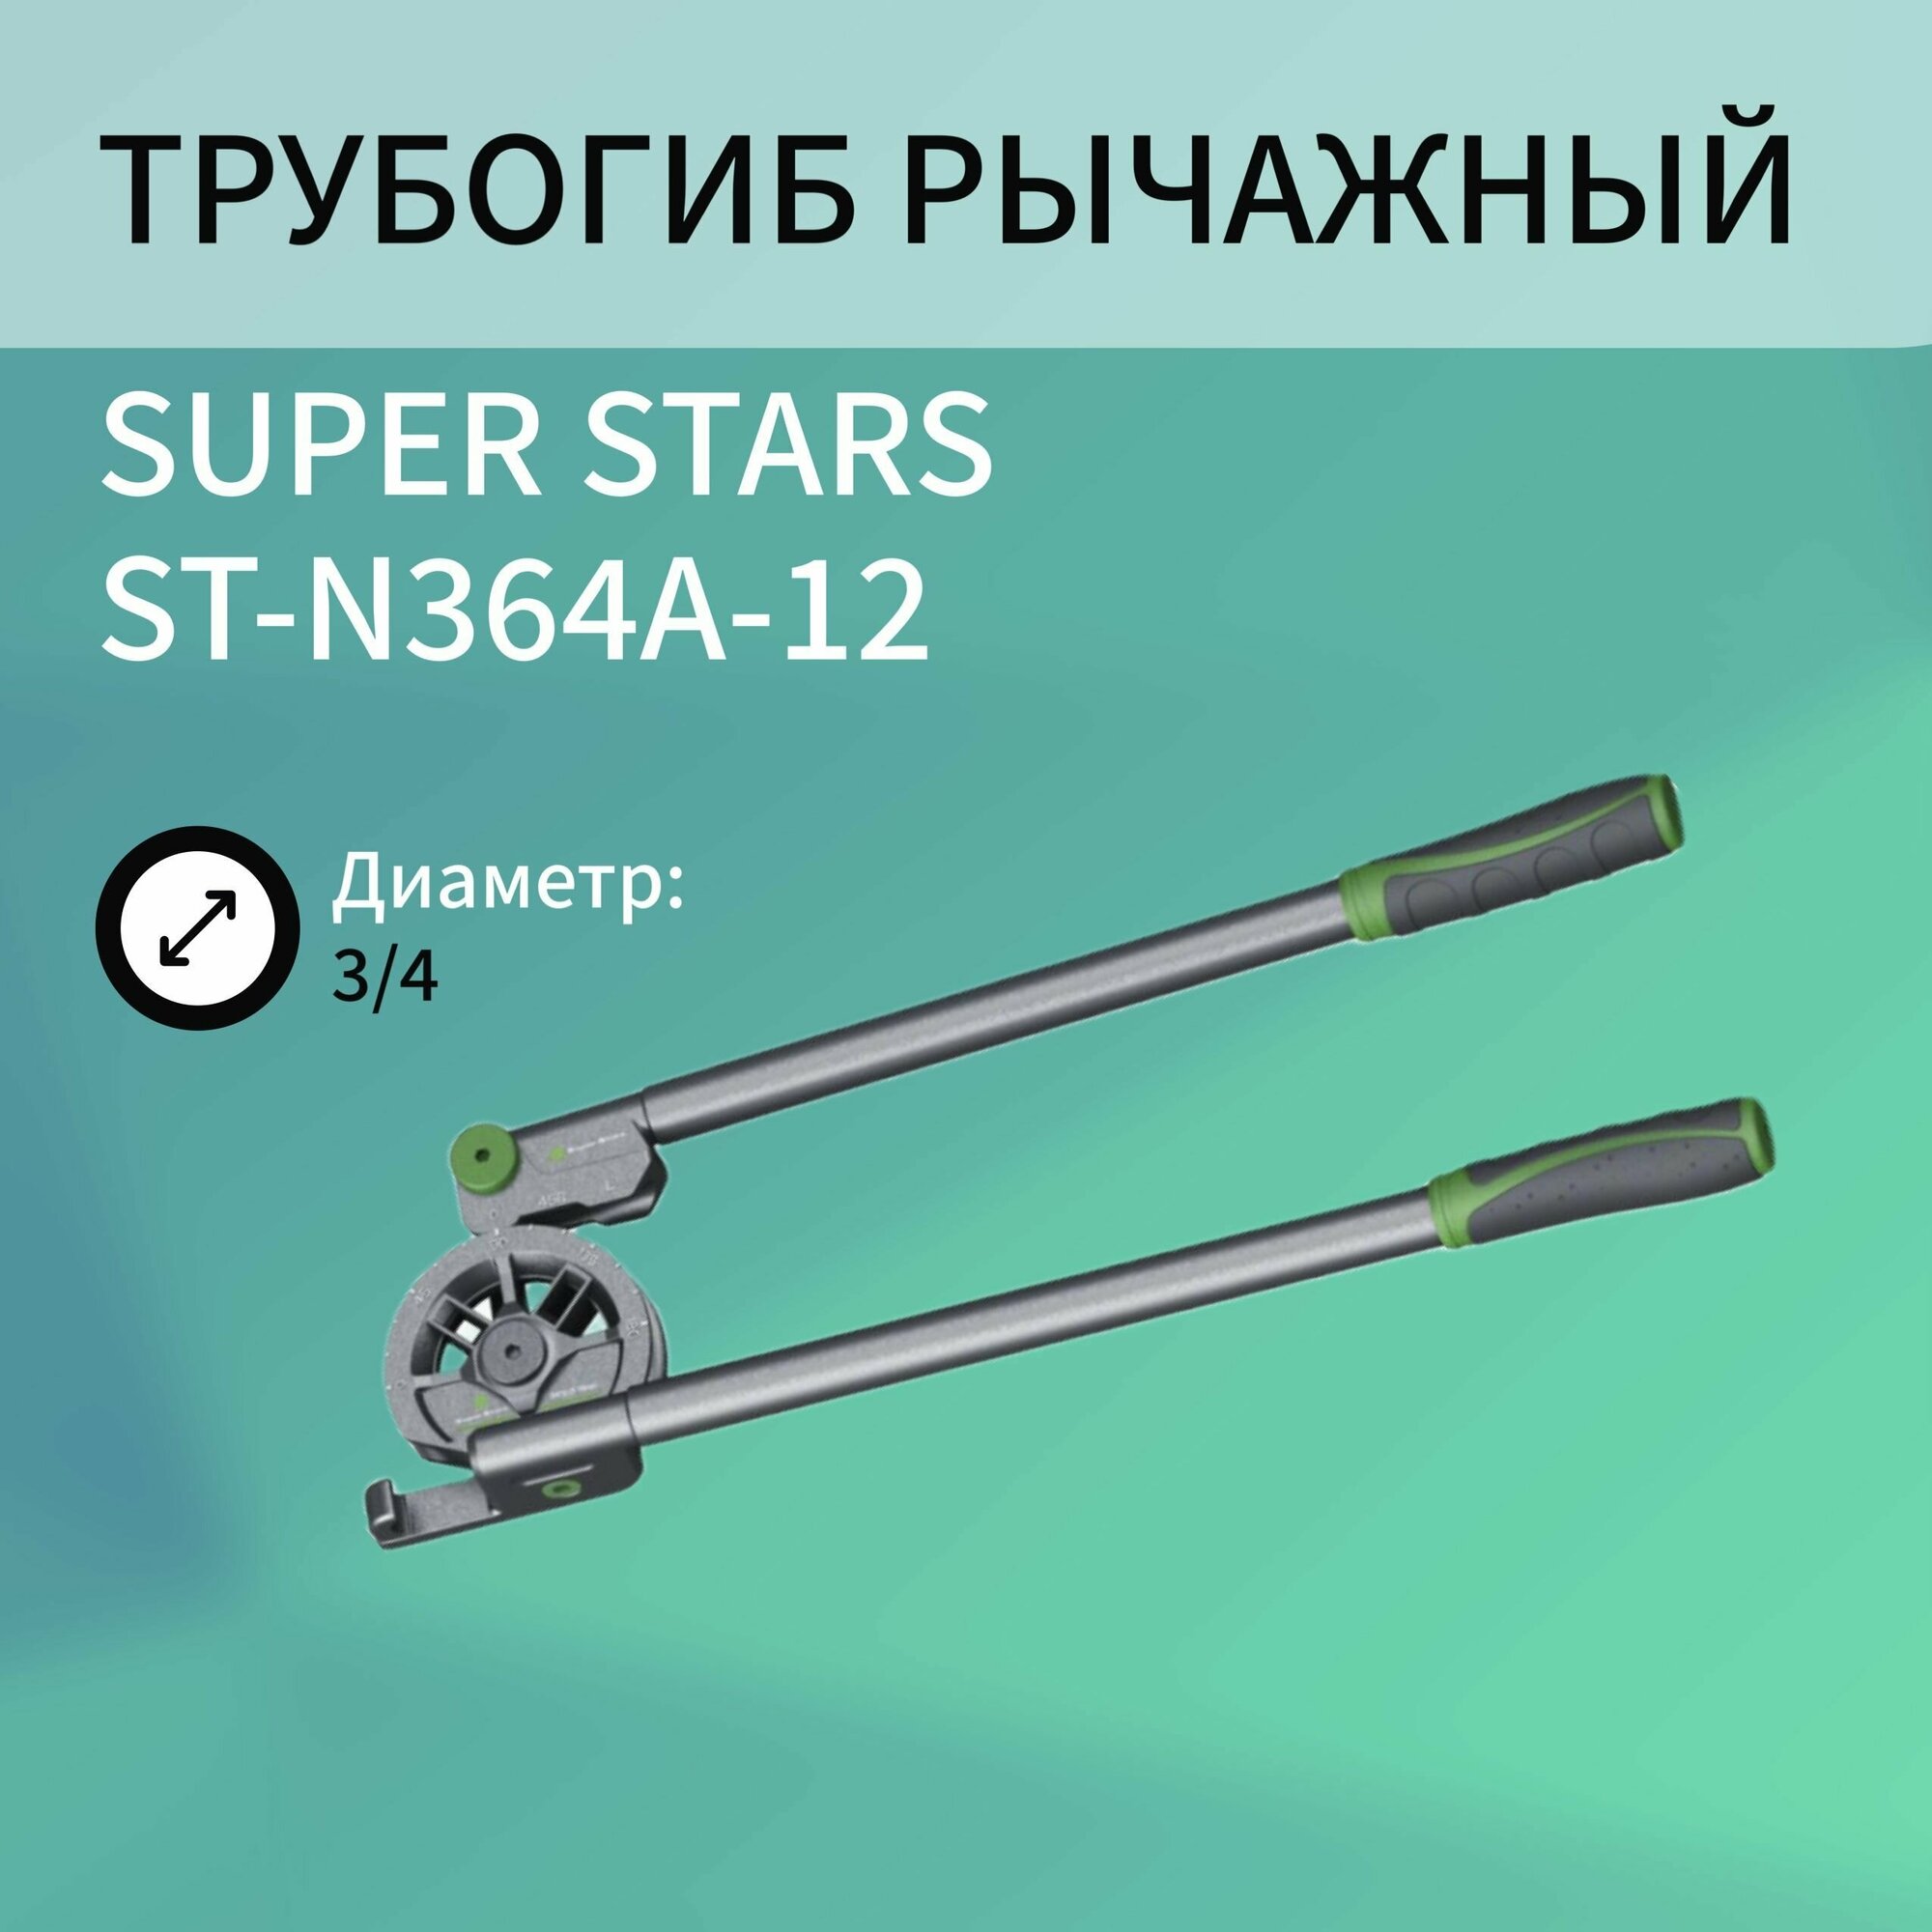 Трубогиб рычажный SUPER STARS ST-N364A-12 диаметр 3/4"